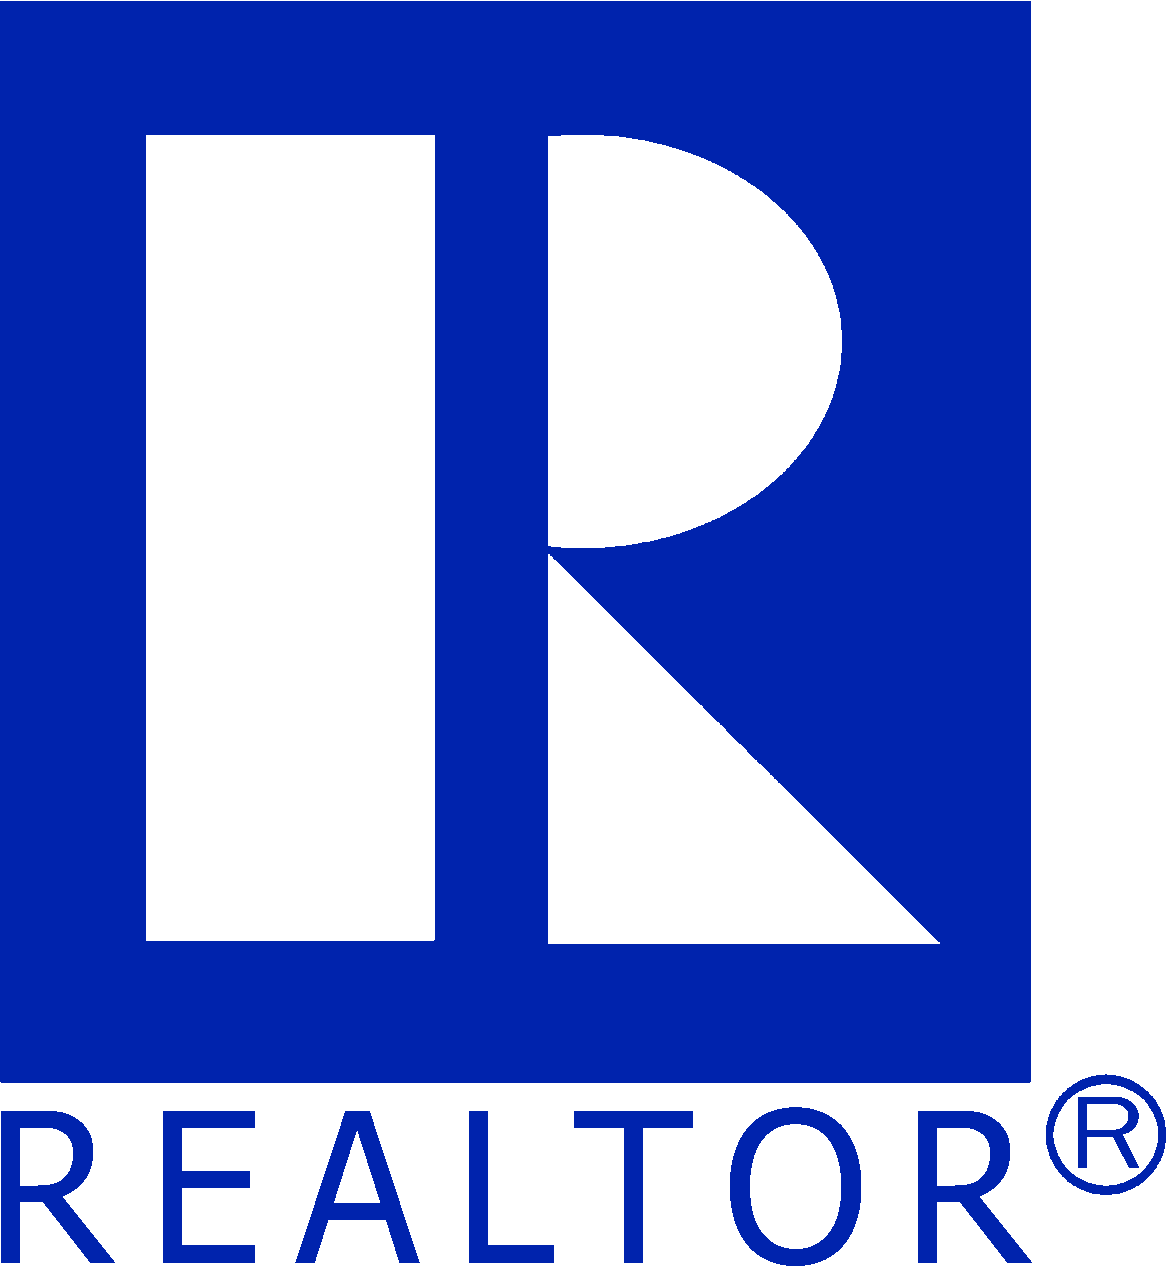 Realtor R Logo - Downloadable Real Estate Industry Logos REALTORS